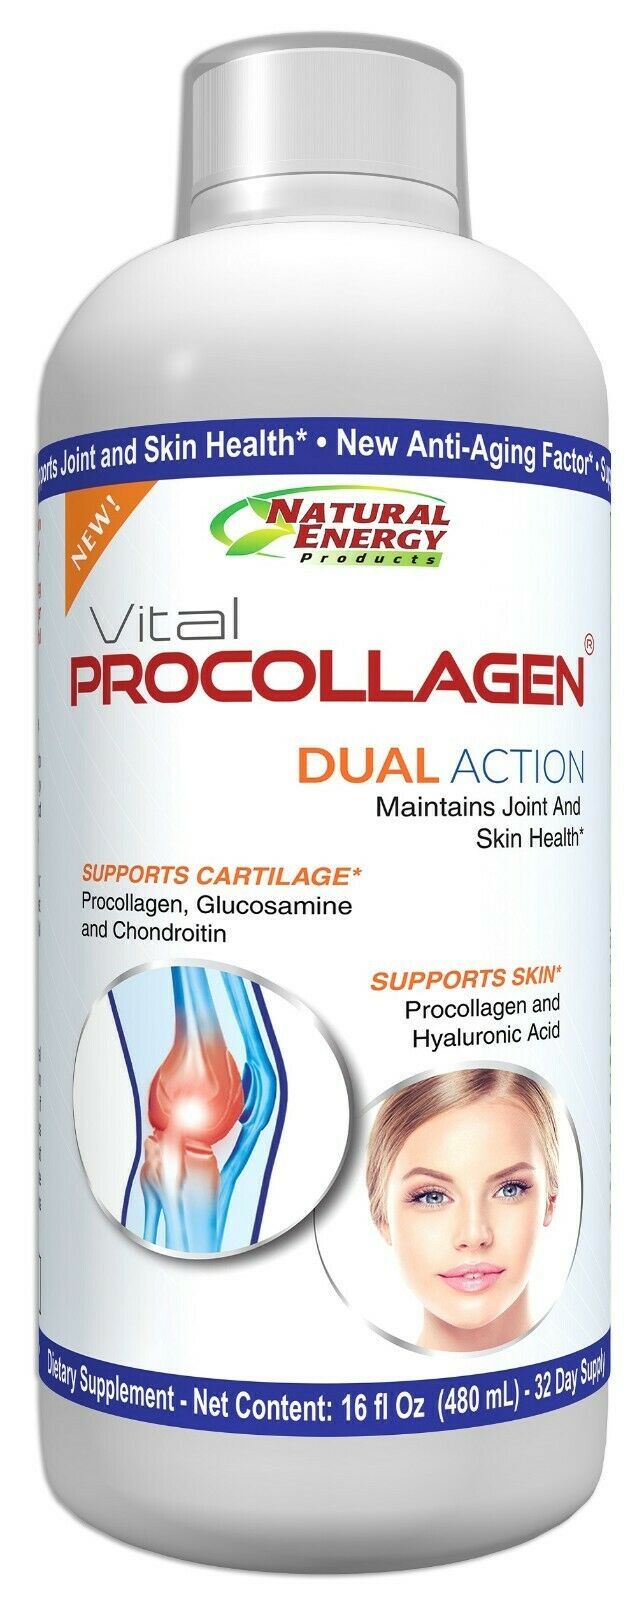 NEW Natural Energy Vital Dual Action Procollagen 16 fl oz.for Skin,Bones & Hair